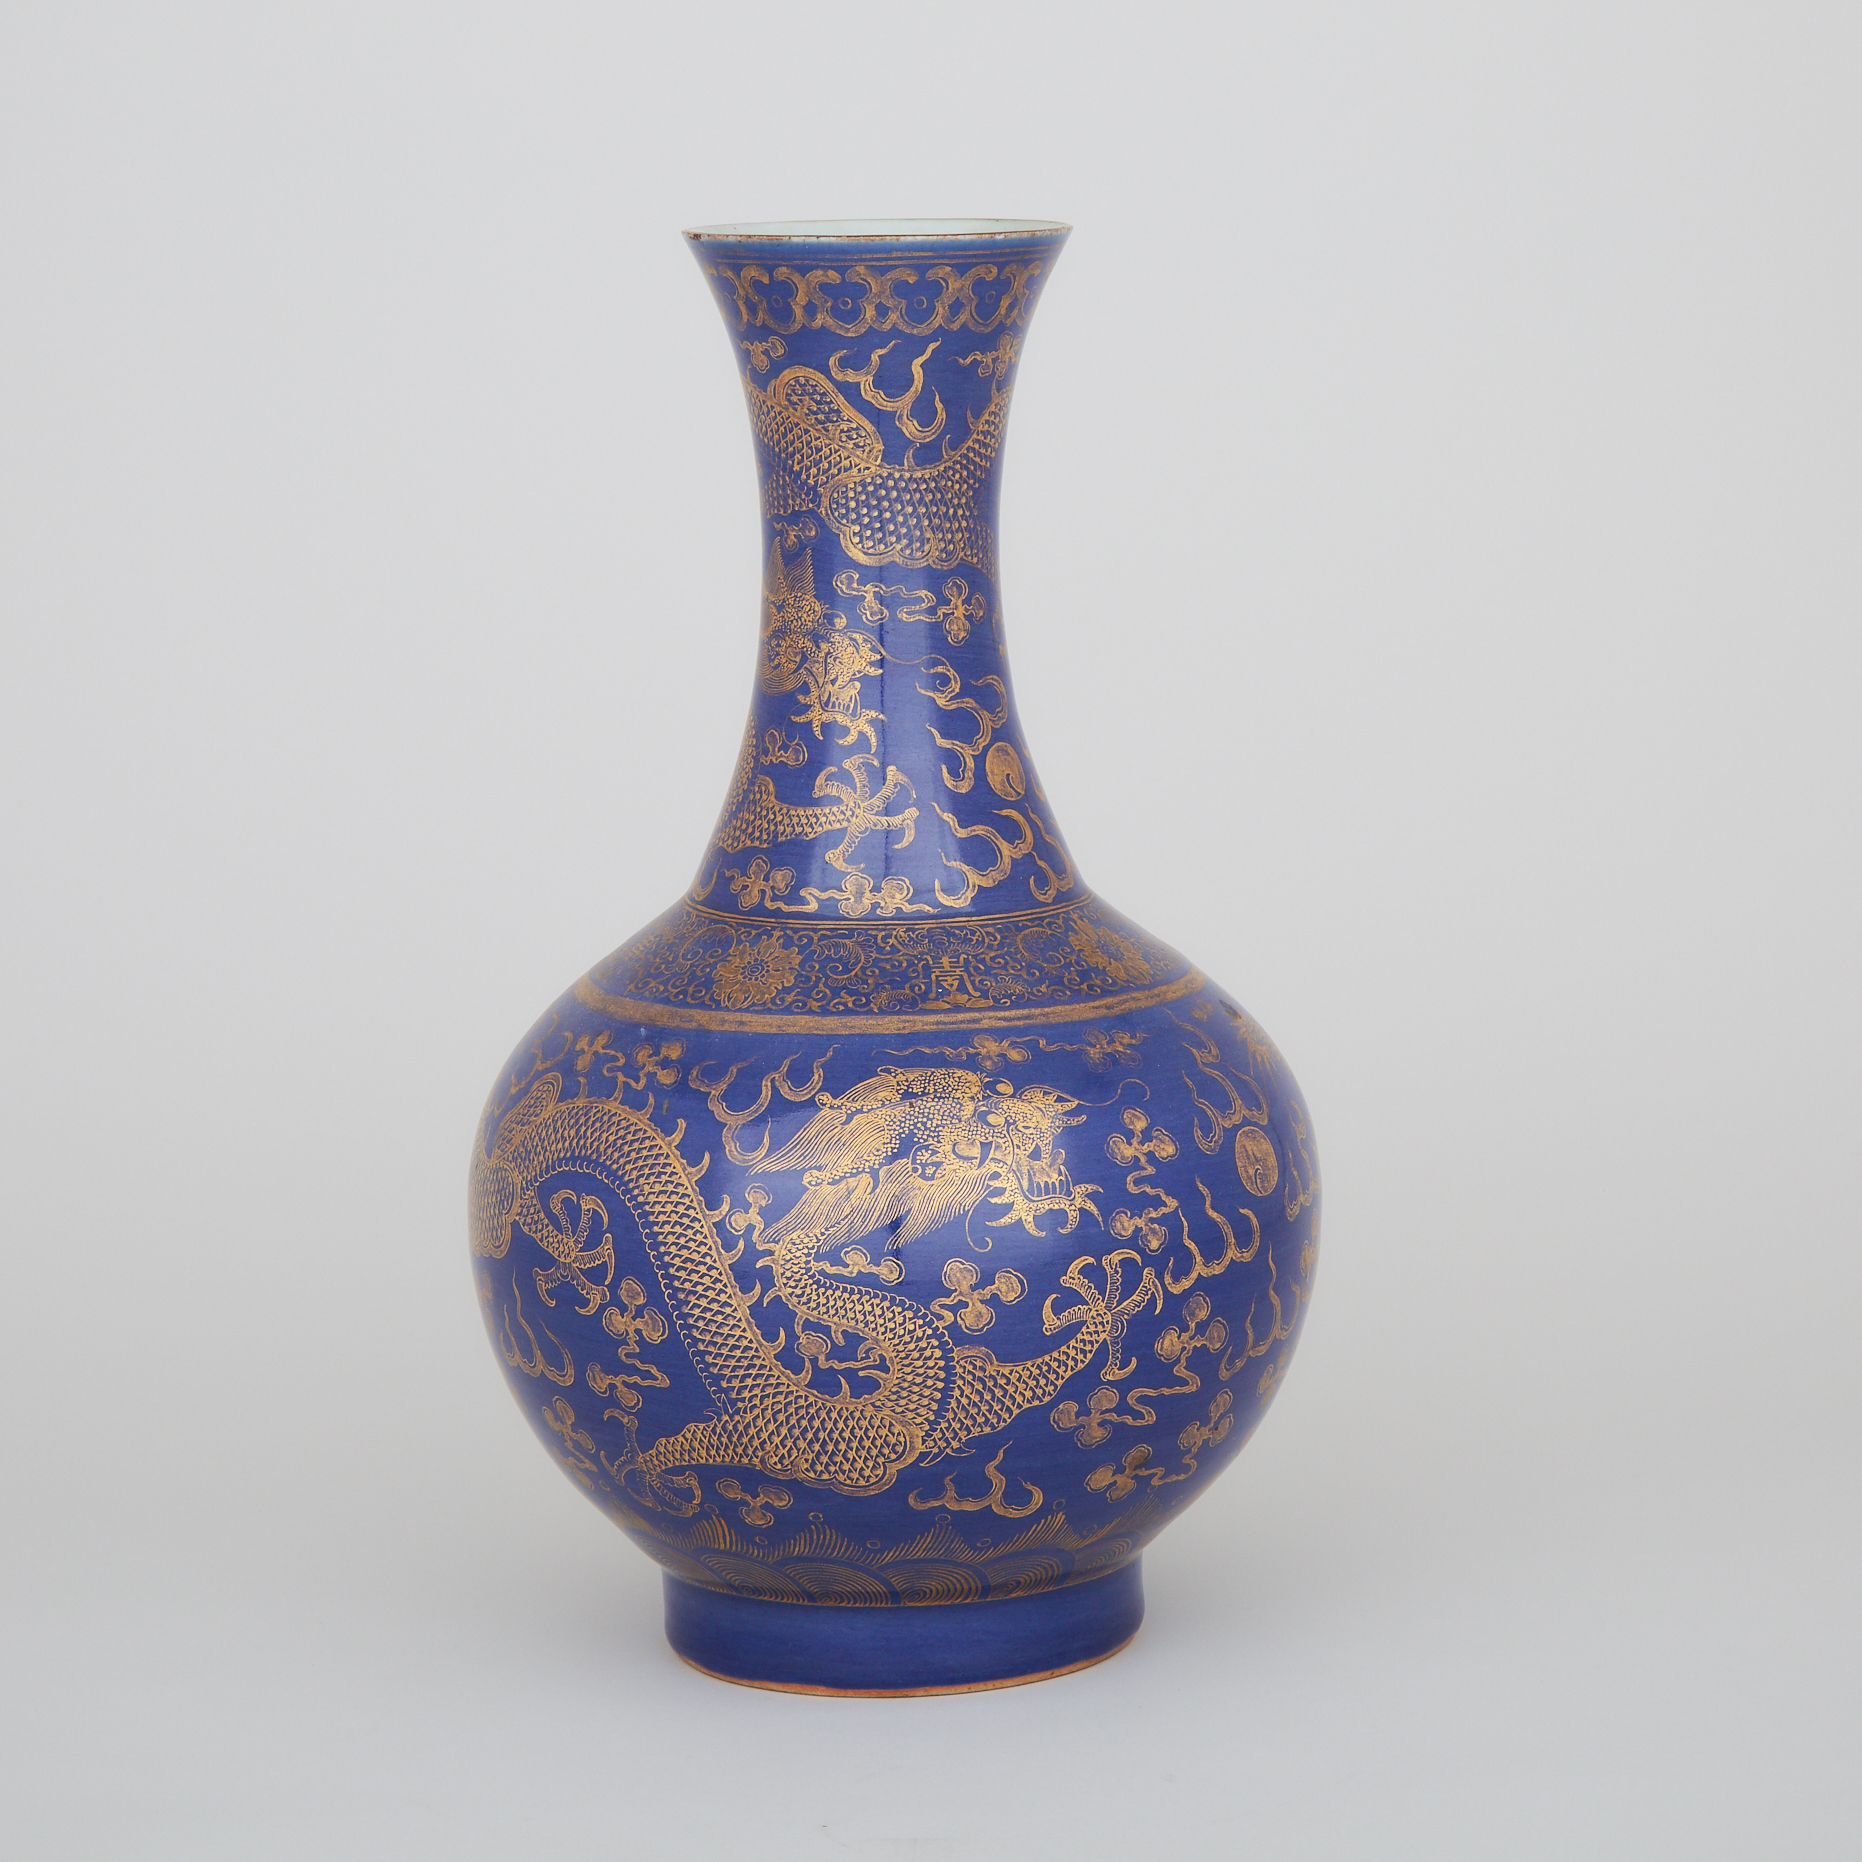 A Gilt-Decorated Blue-Ground Bottle Vase